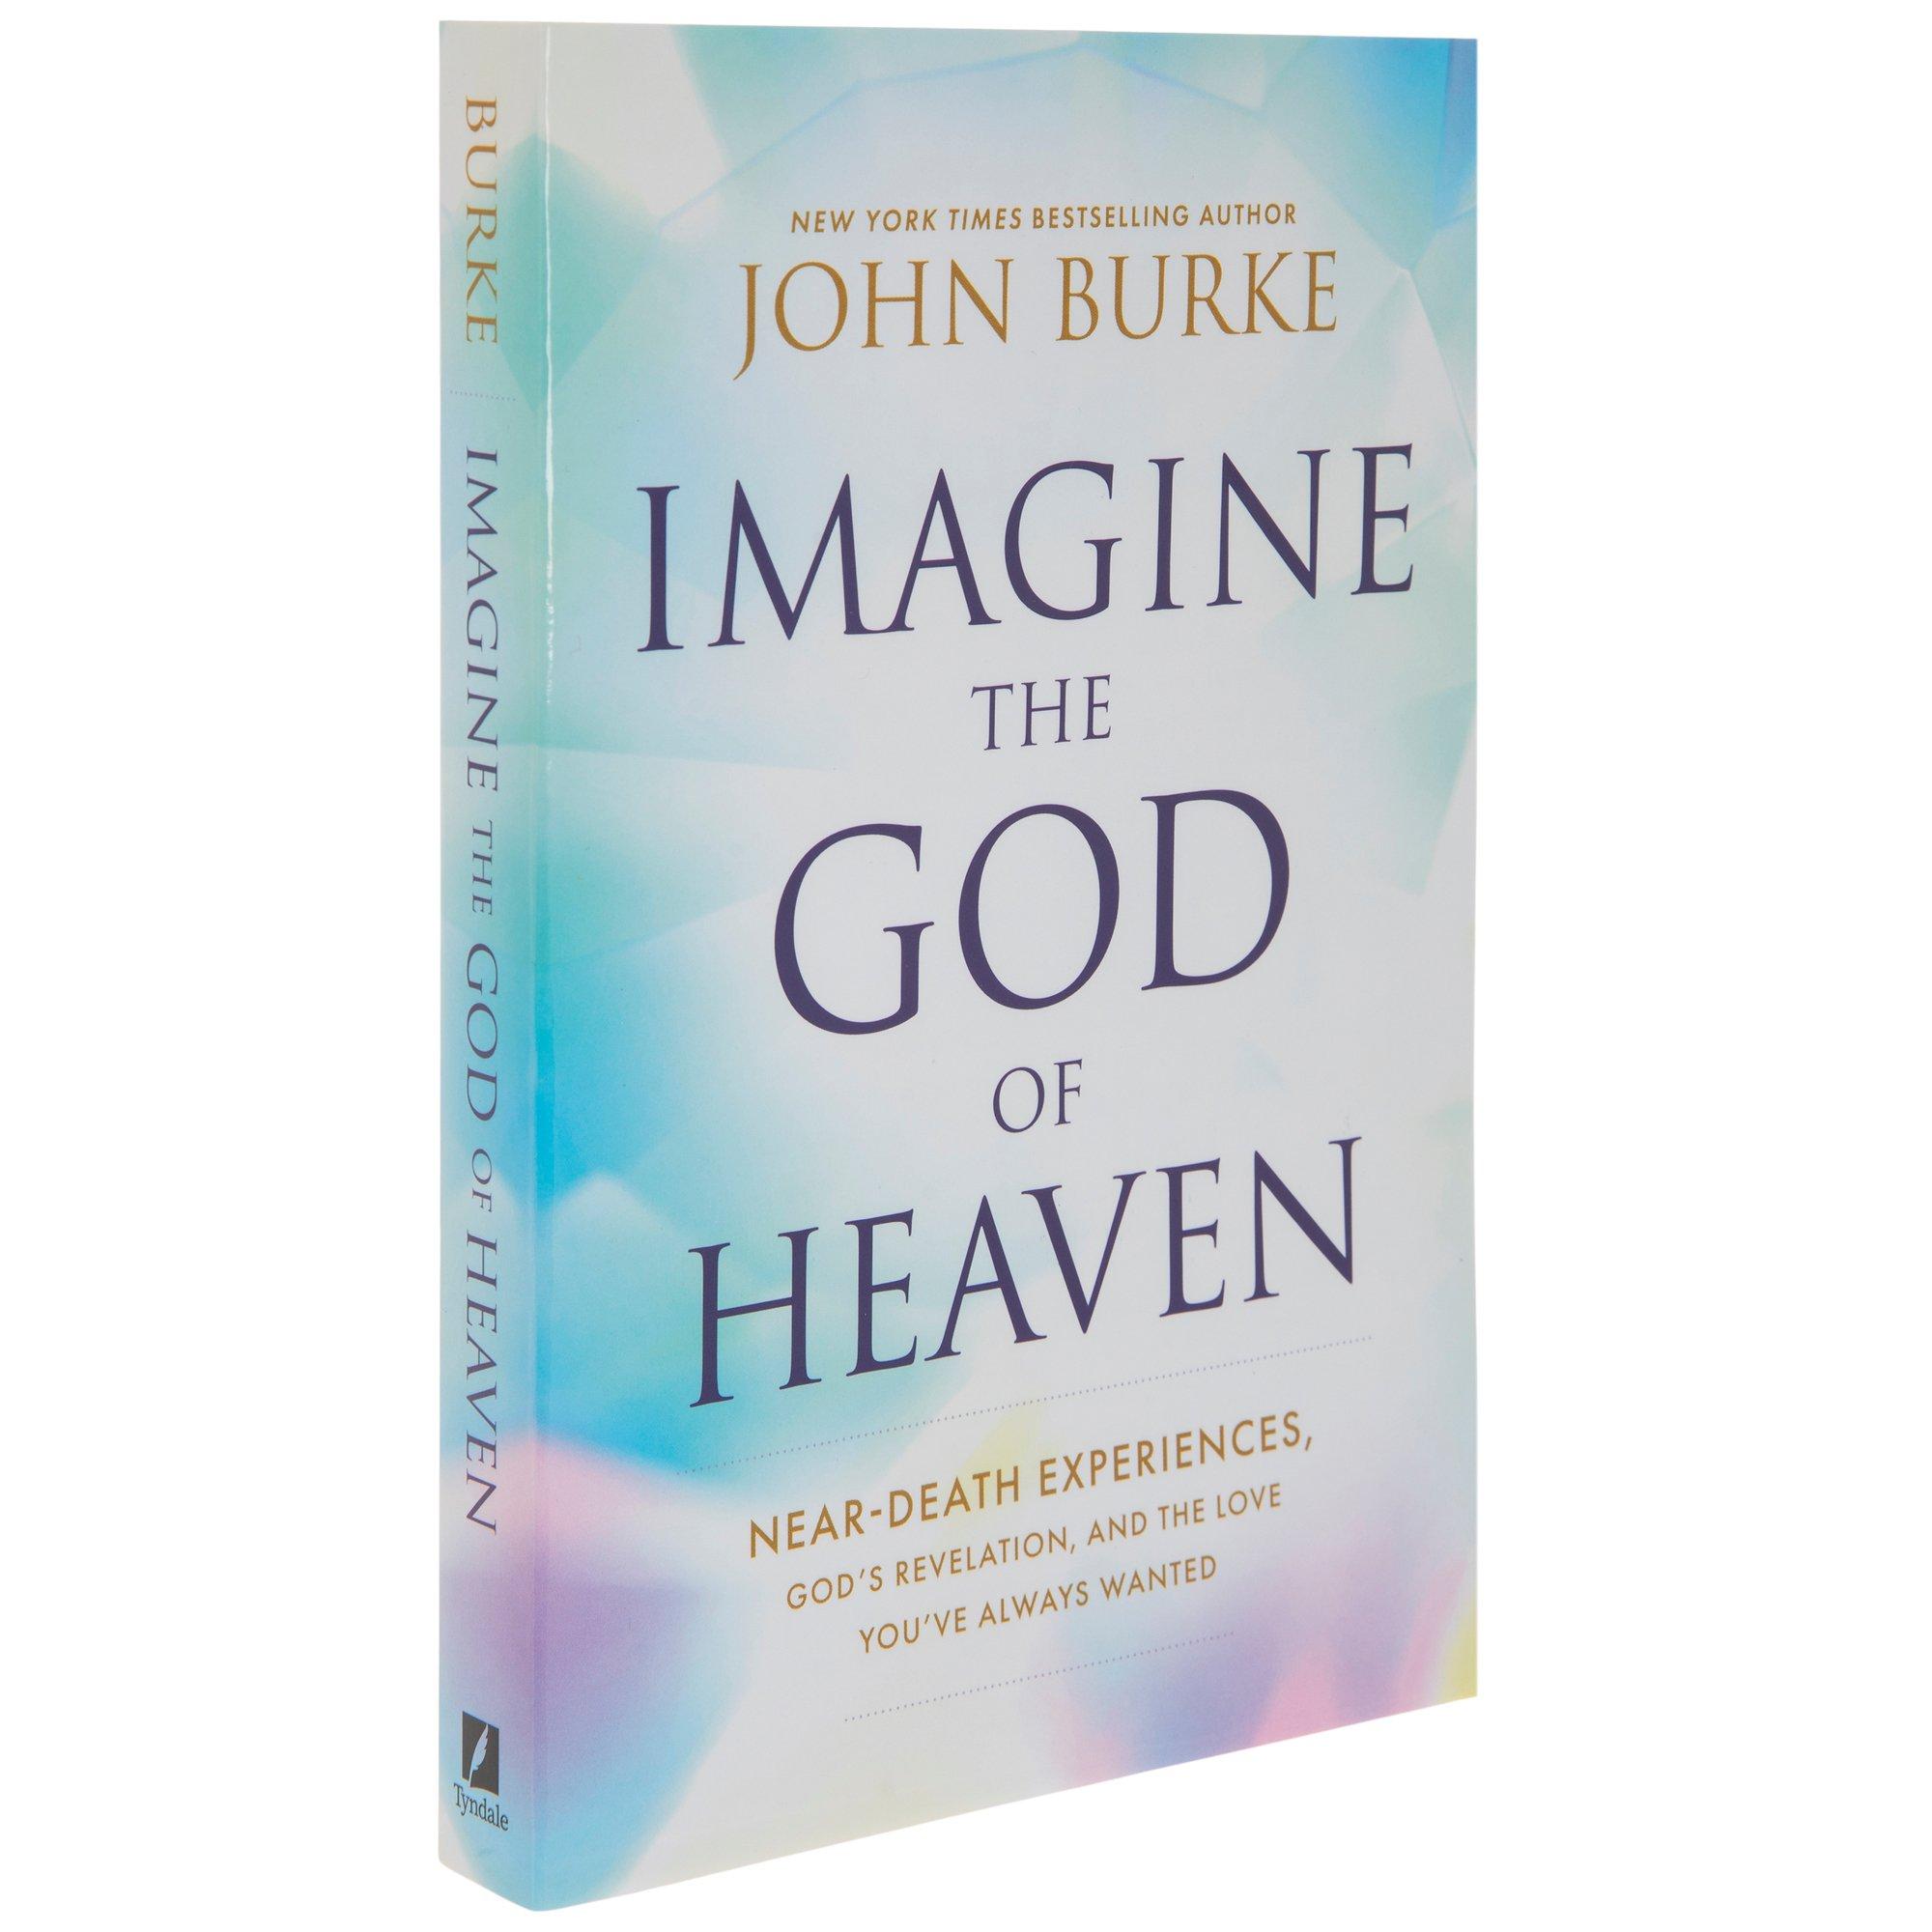 Imagine the God of Heaven: Near-Death Experiences, God's